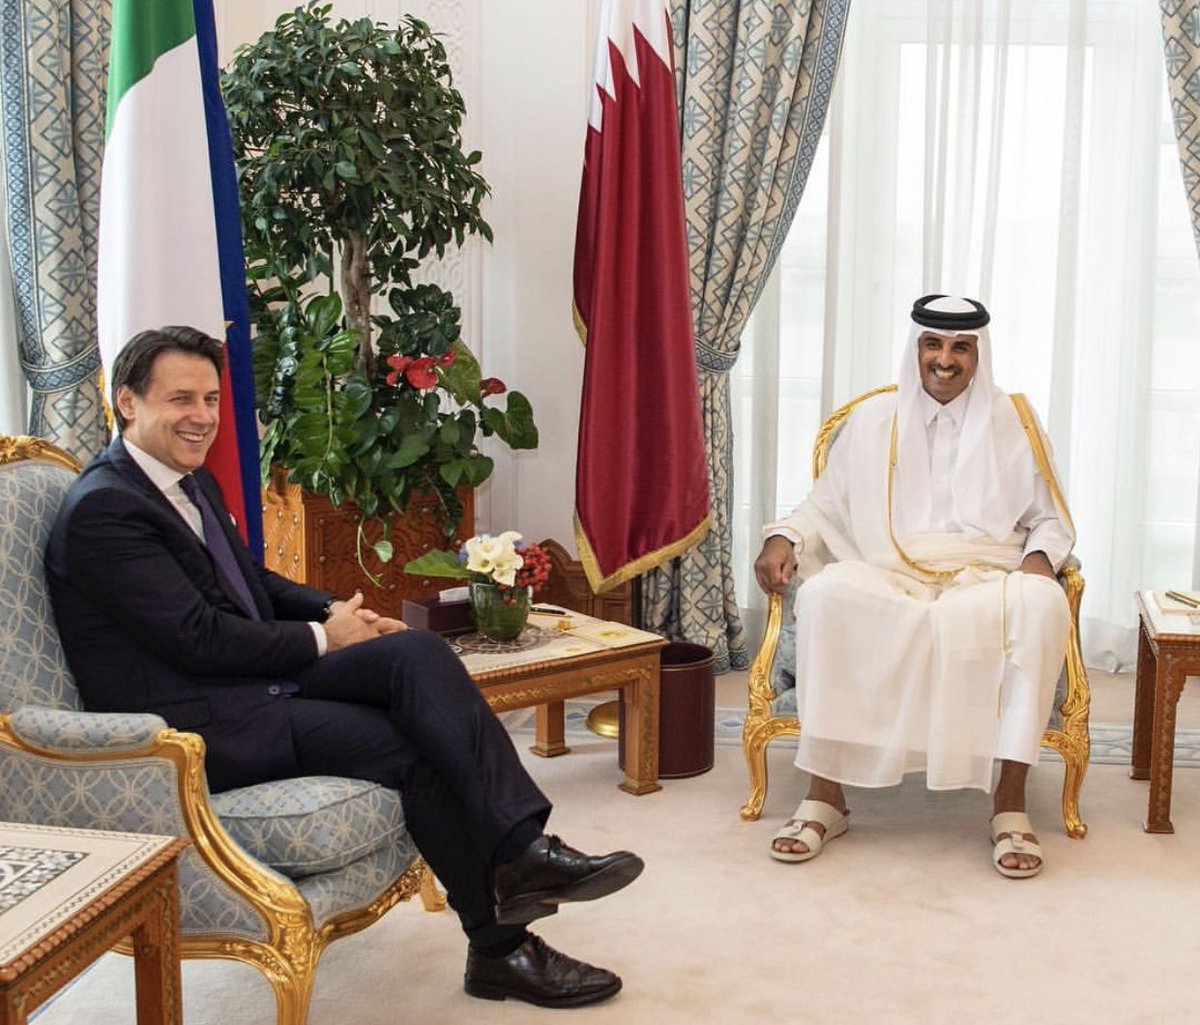 Amir and Italian Prime Minister hold talks